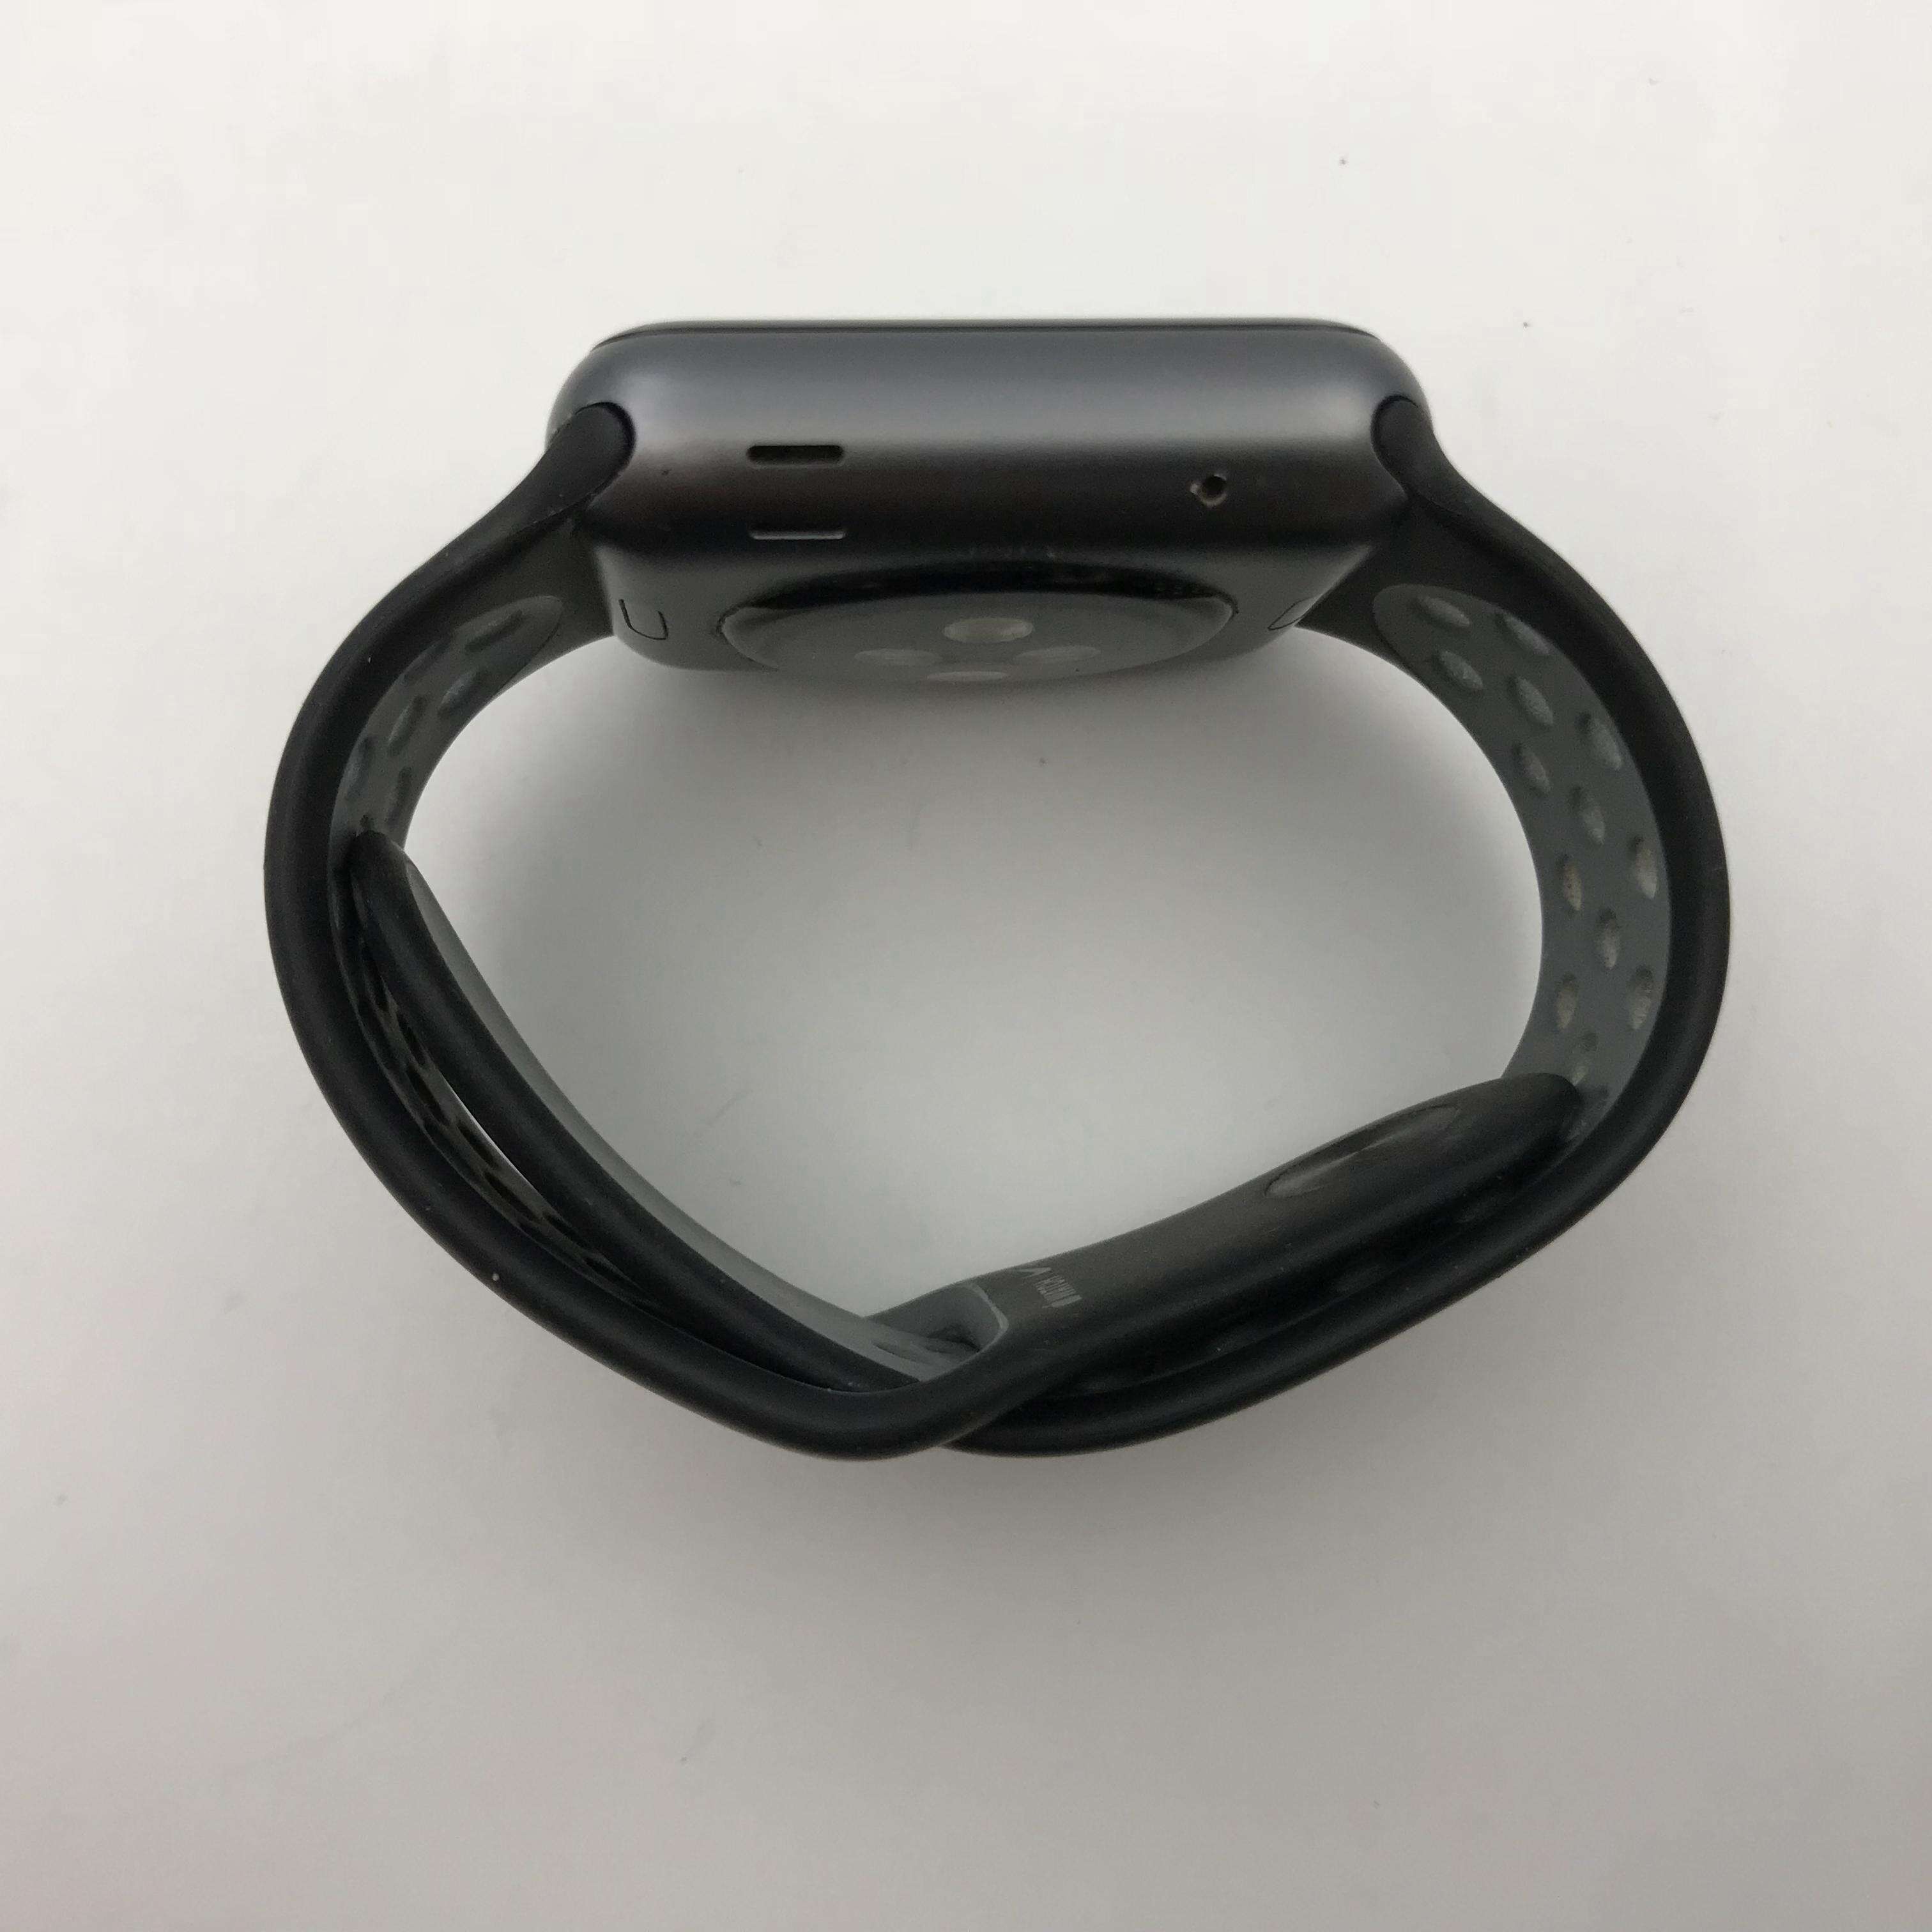 Apple Watch Series 1铝金属表壳 38MM 非国行GPS版